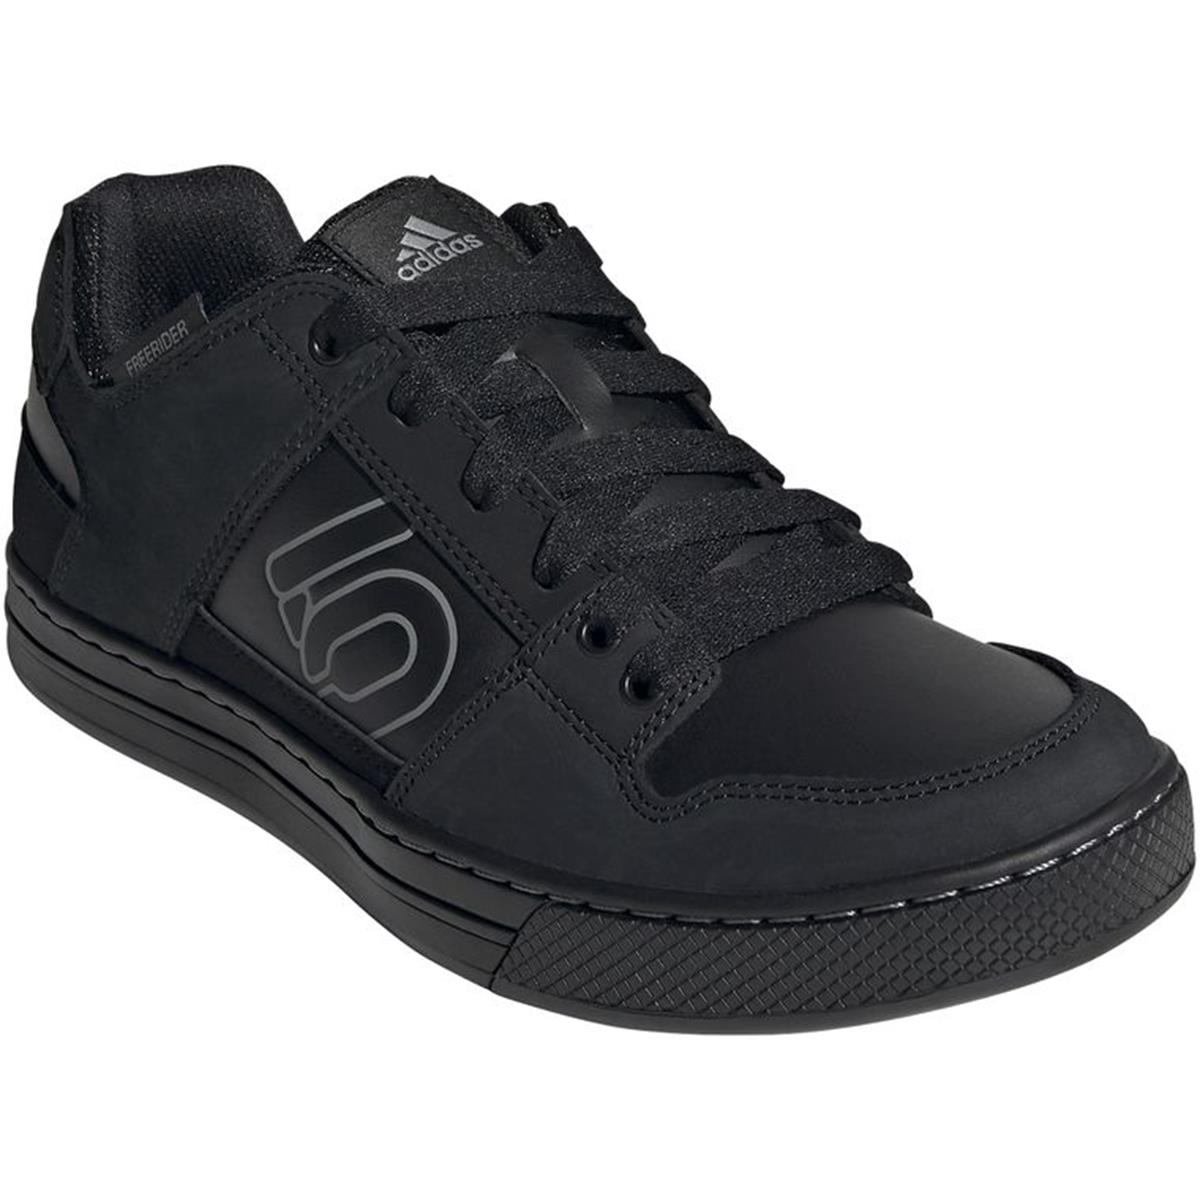 Five Ten Chaussures VTT Freerider DLX Core Black/Core Black/Gray Three